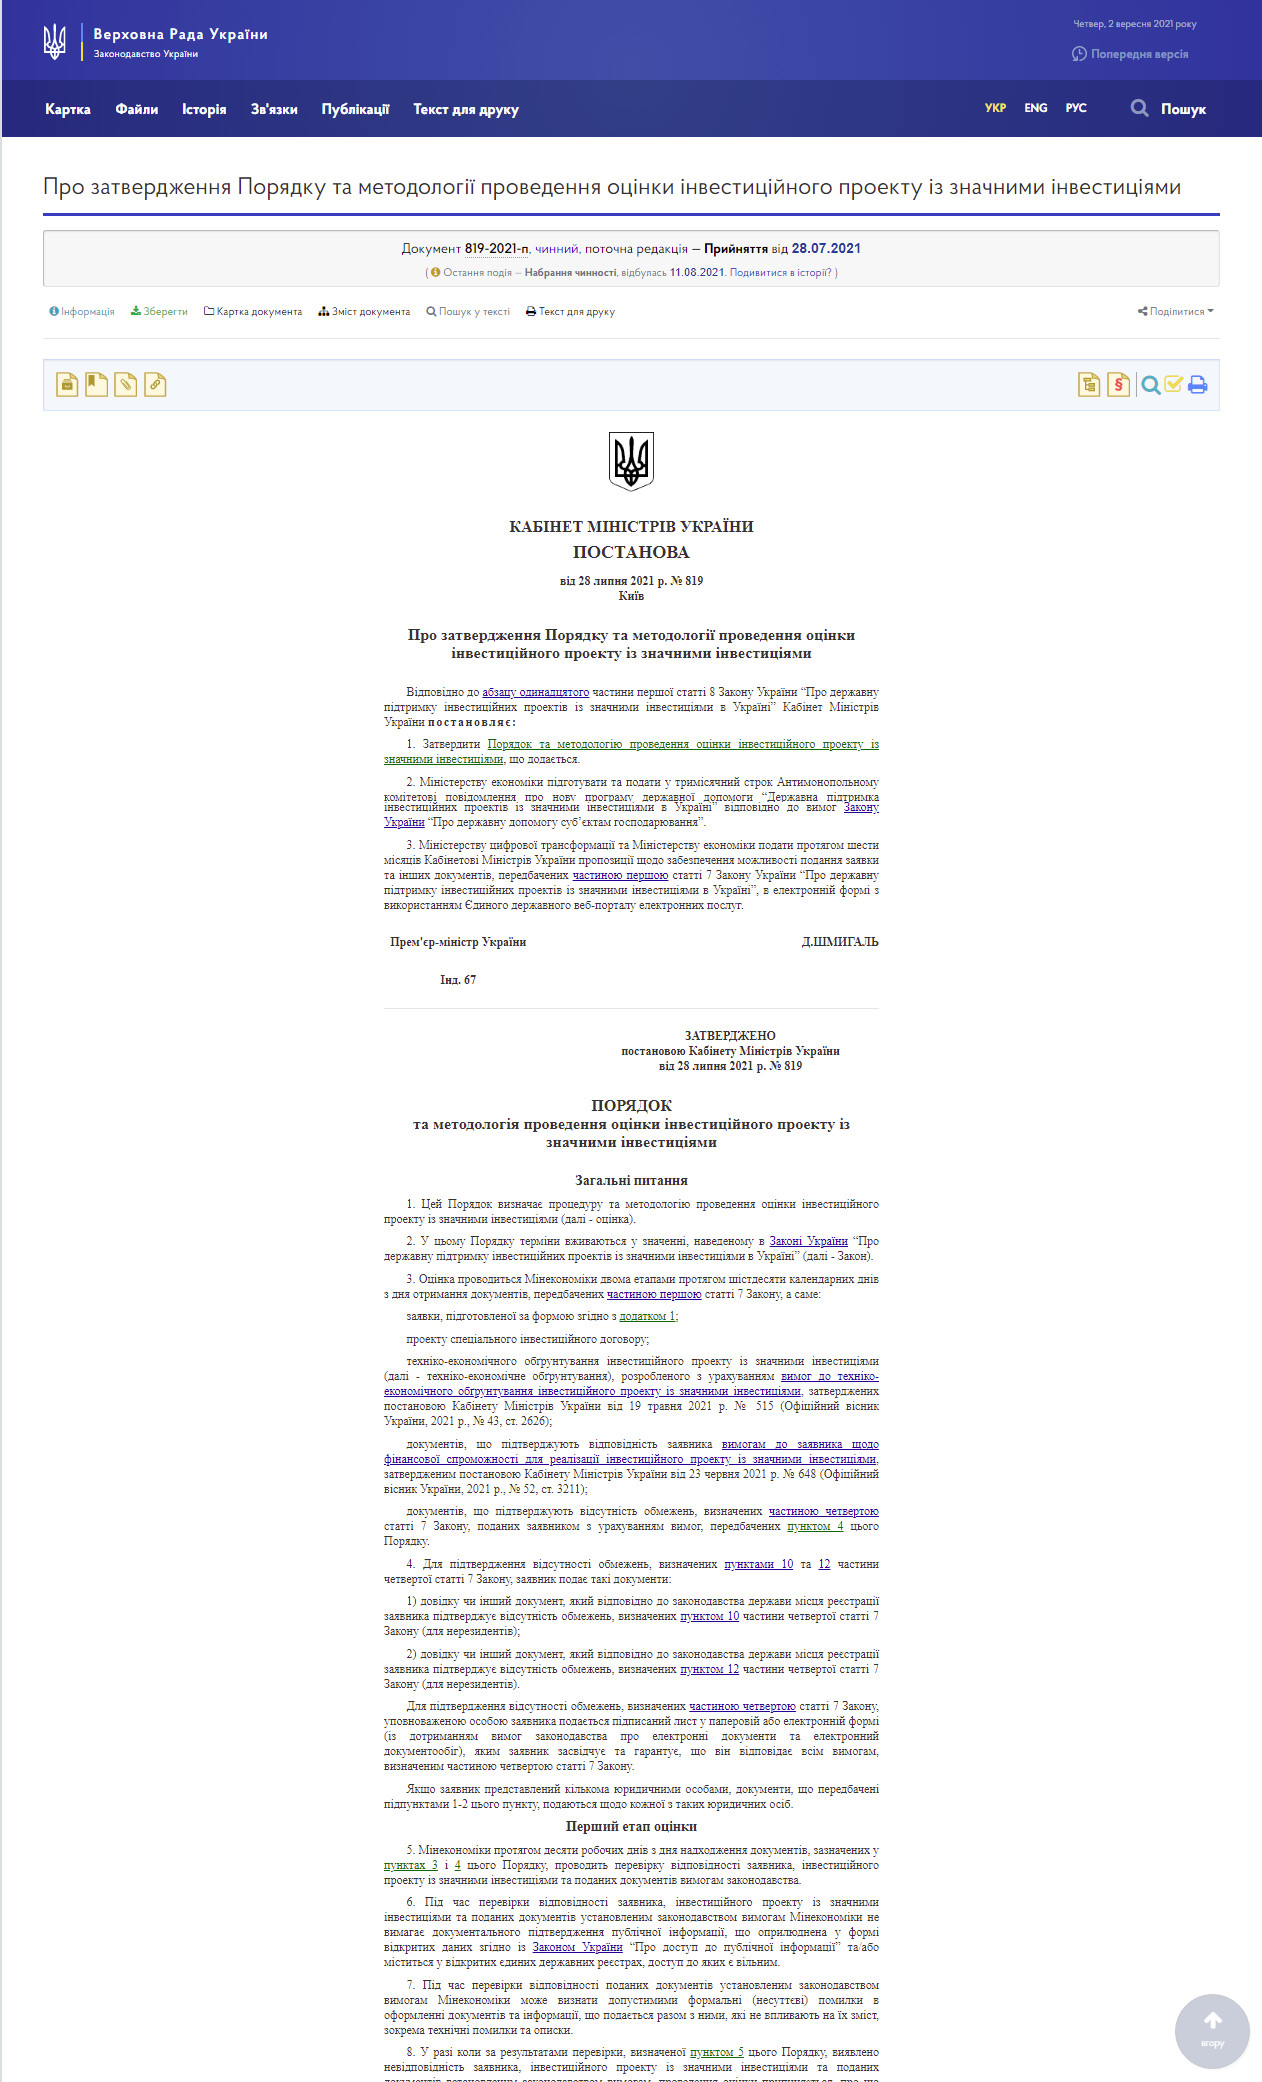 https://zakon.rada.gov.ua/laws/show/819-2021-%D0%BF#Text